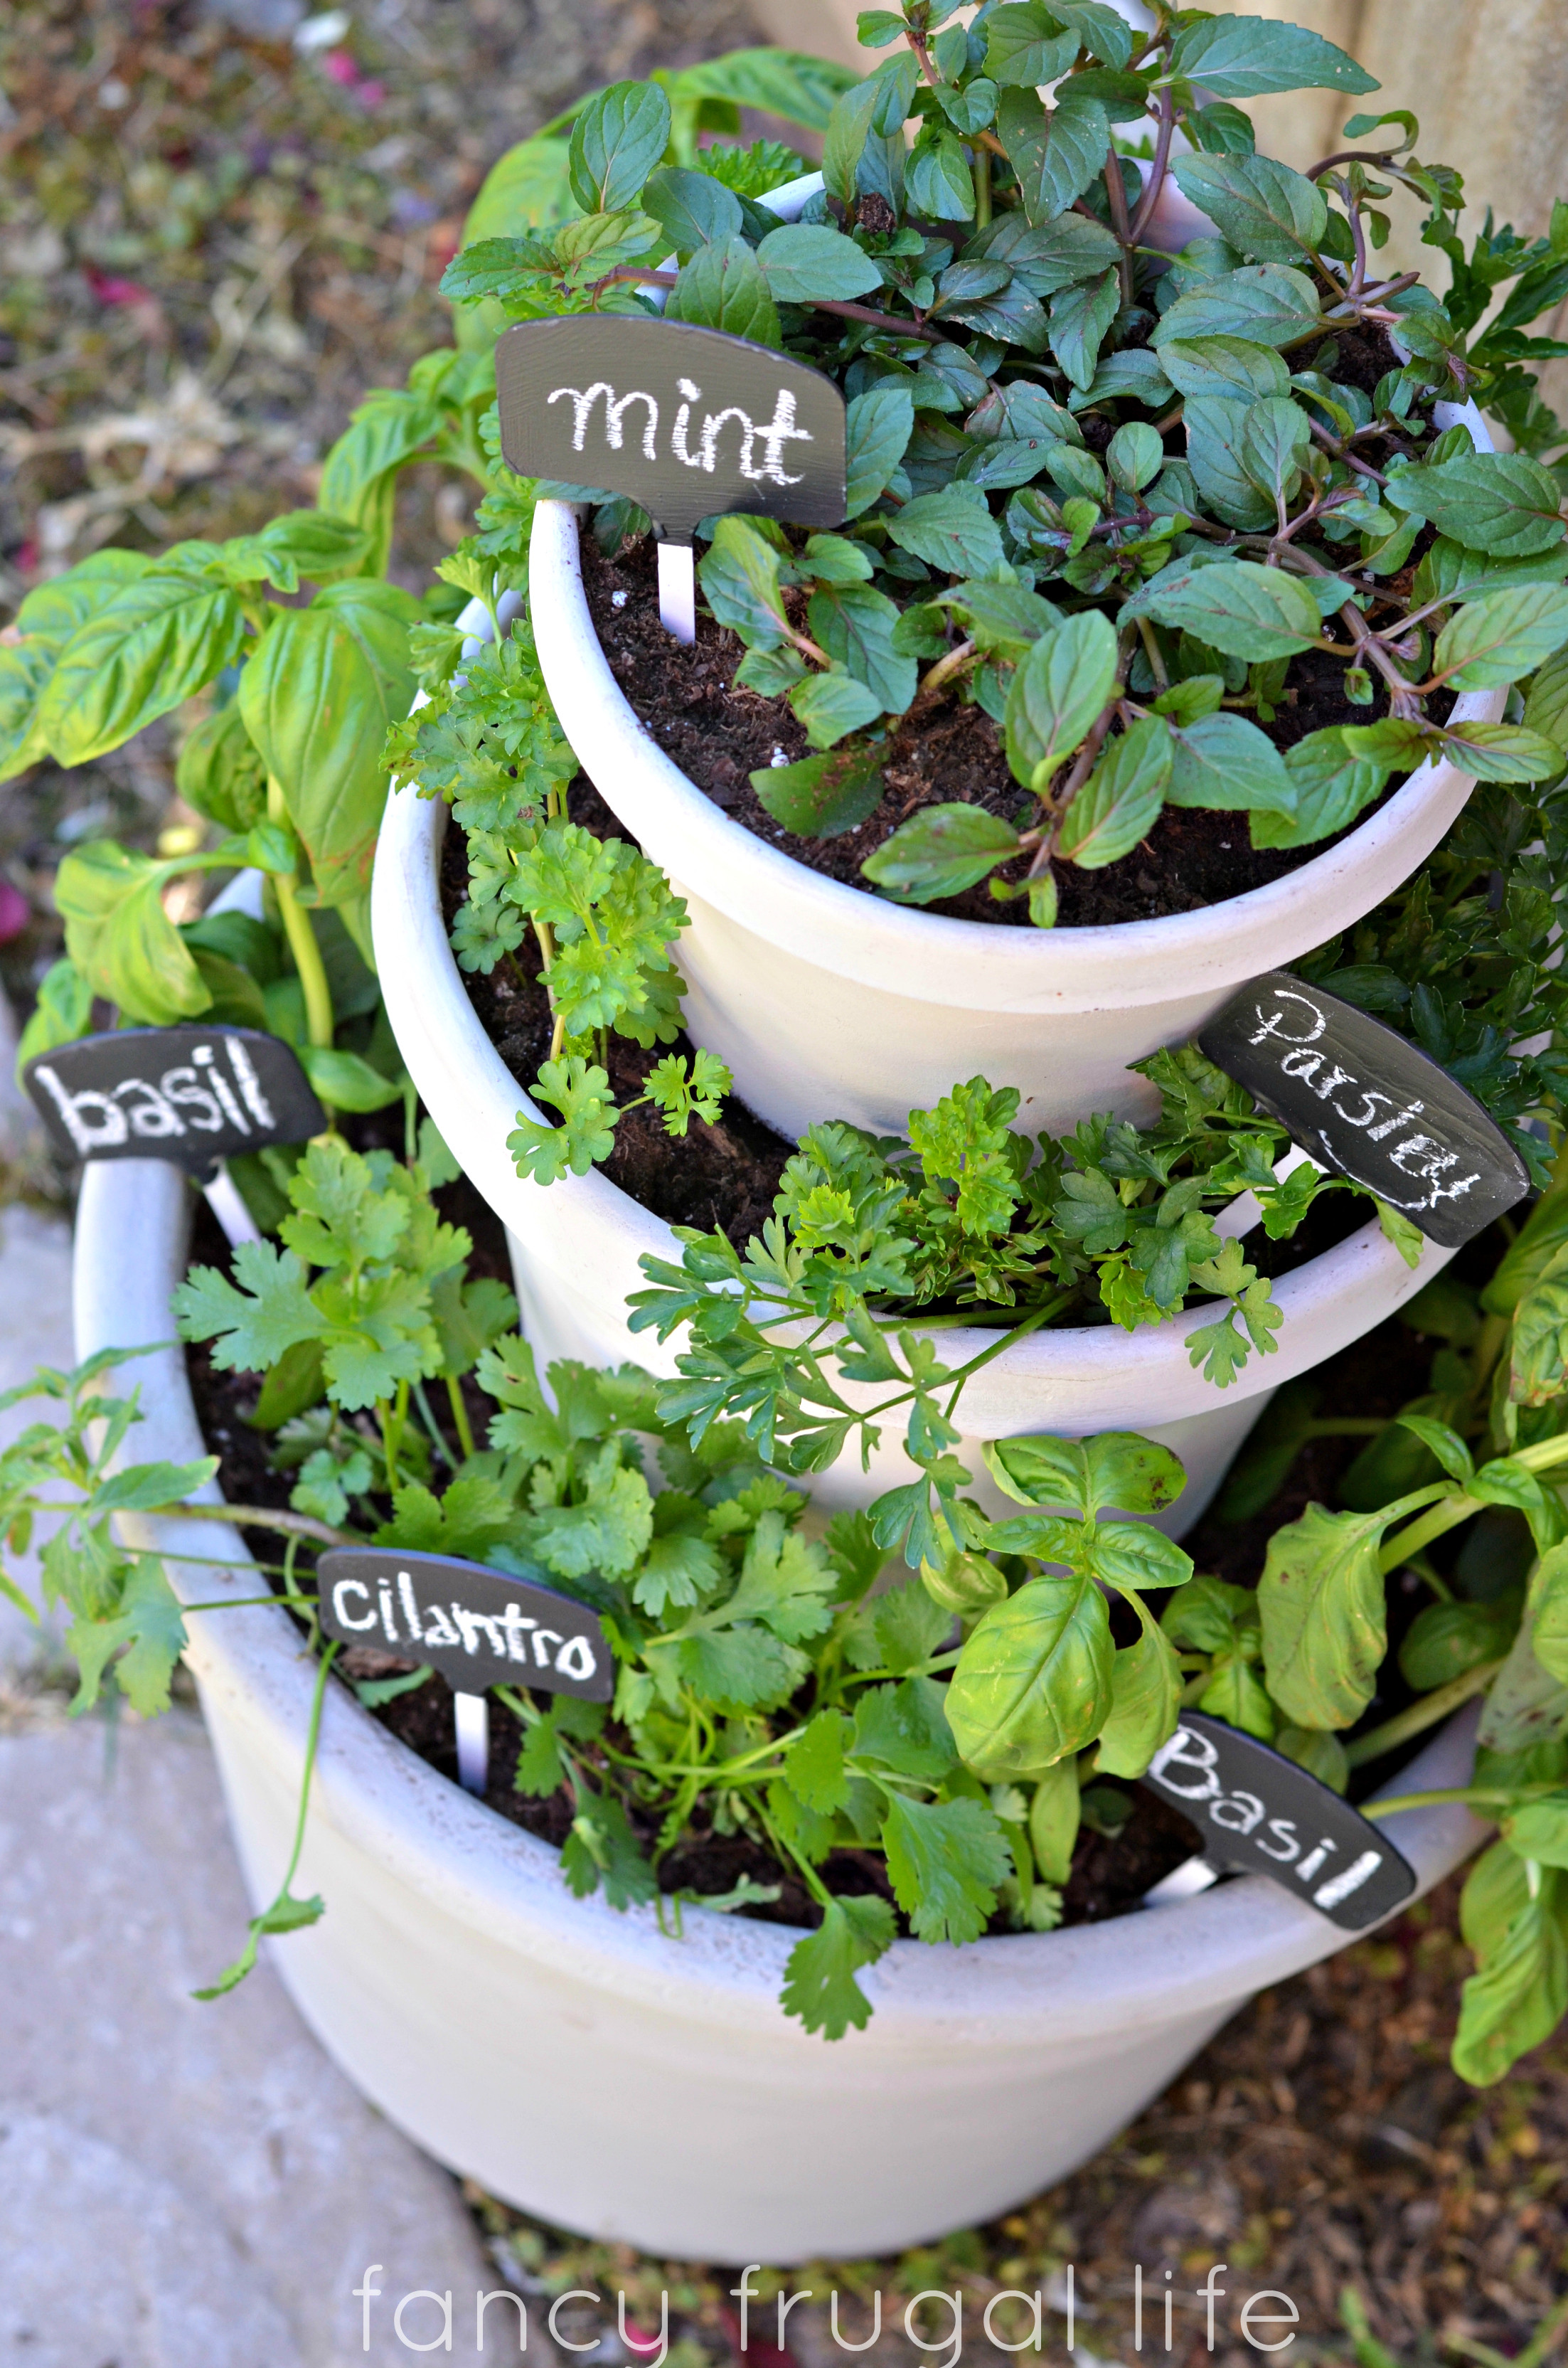 Best ideas about Herb Garden Planter
. Save or Pin Outdoor Herb Garden Ideas The Idea Room Now.